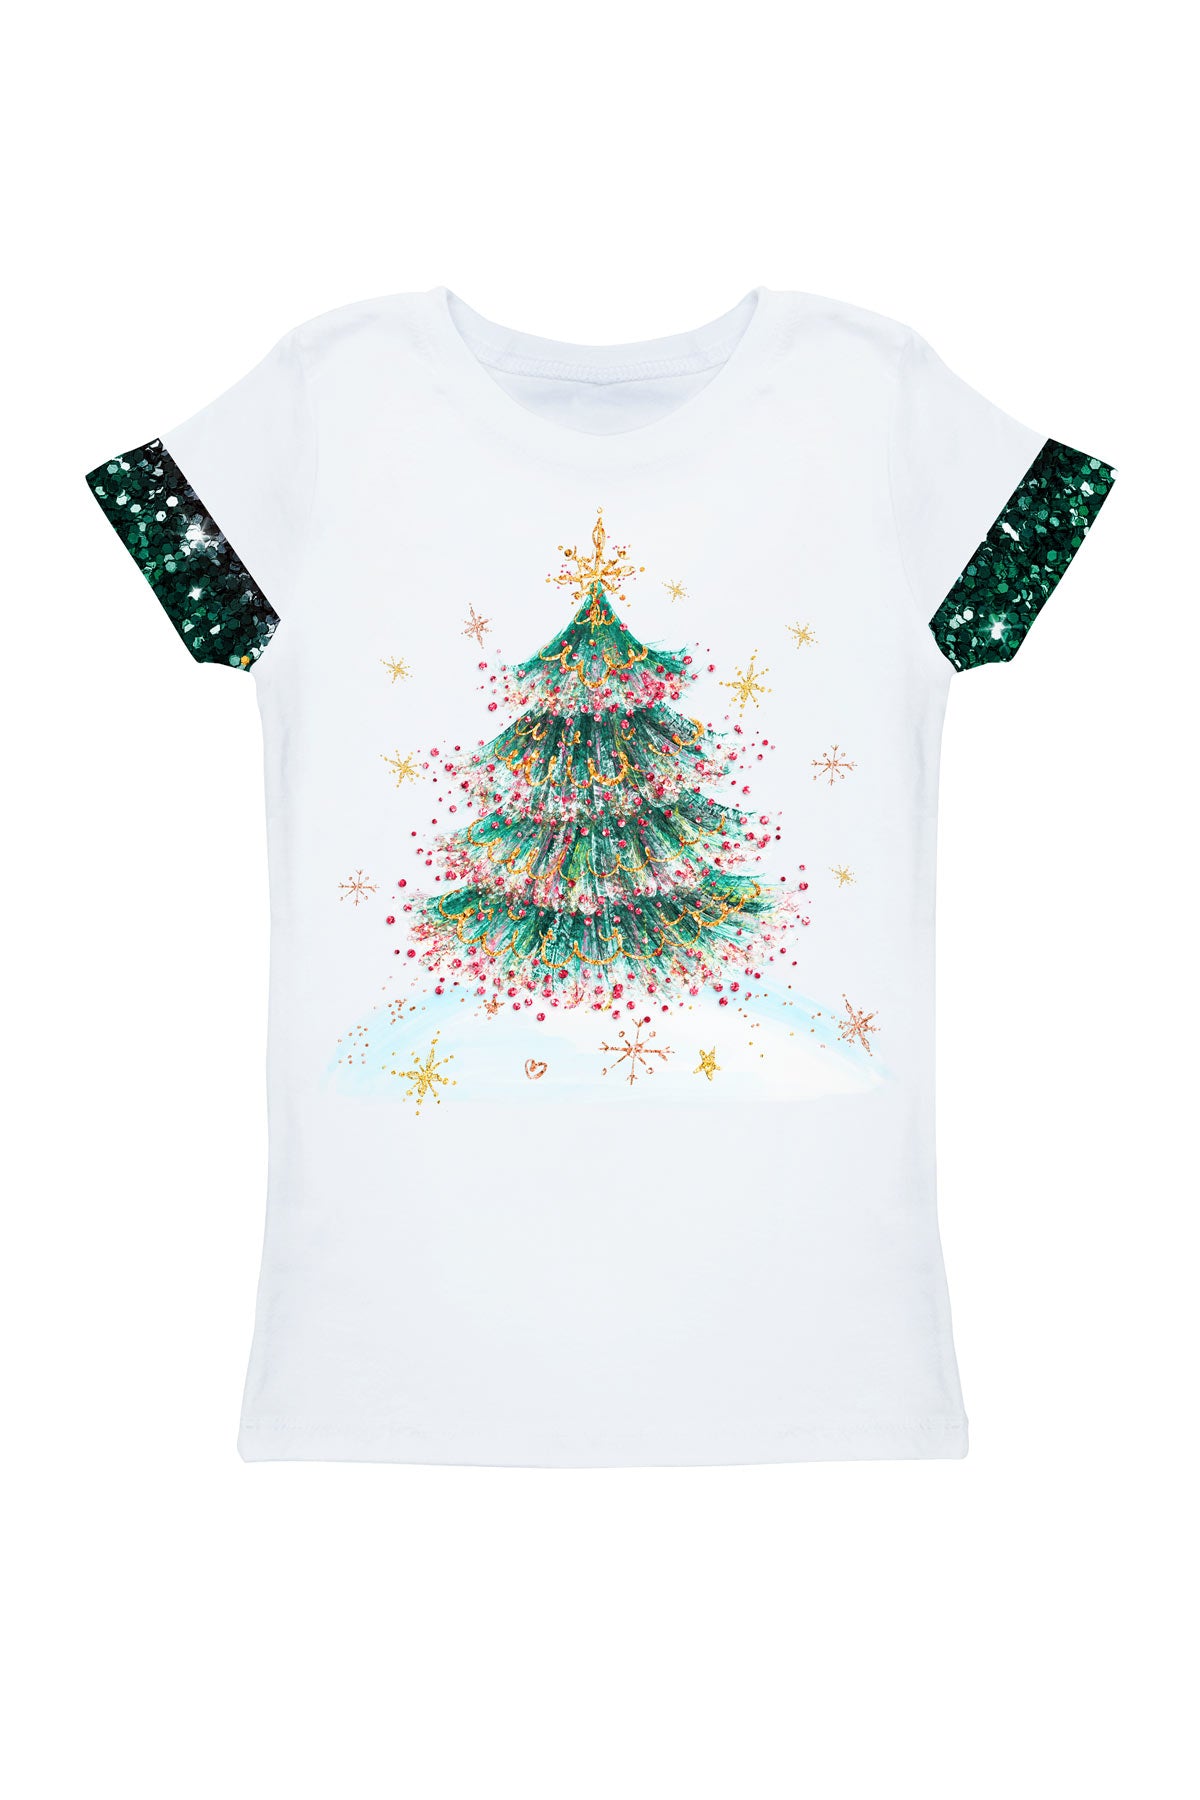 Image of Glitzy Tinsel Zoe White Christmas Tree Printed Holiday T-Shirt - Girls